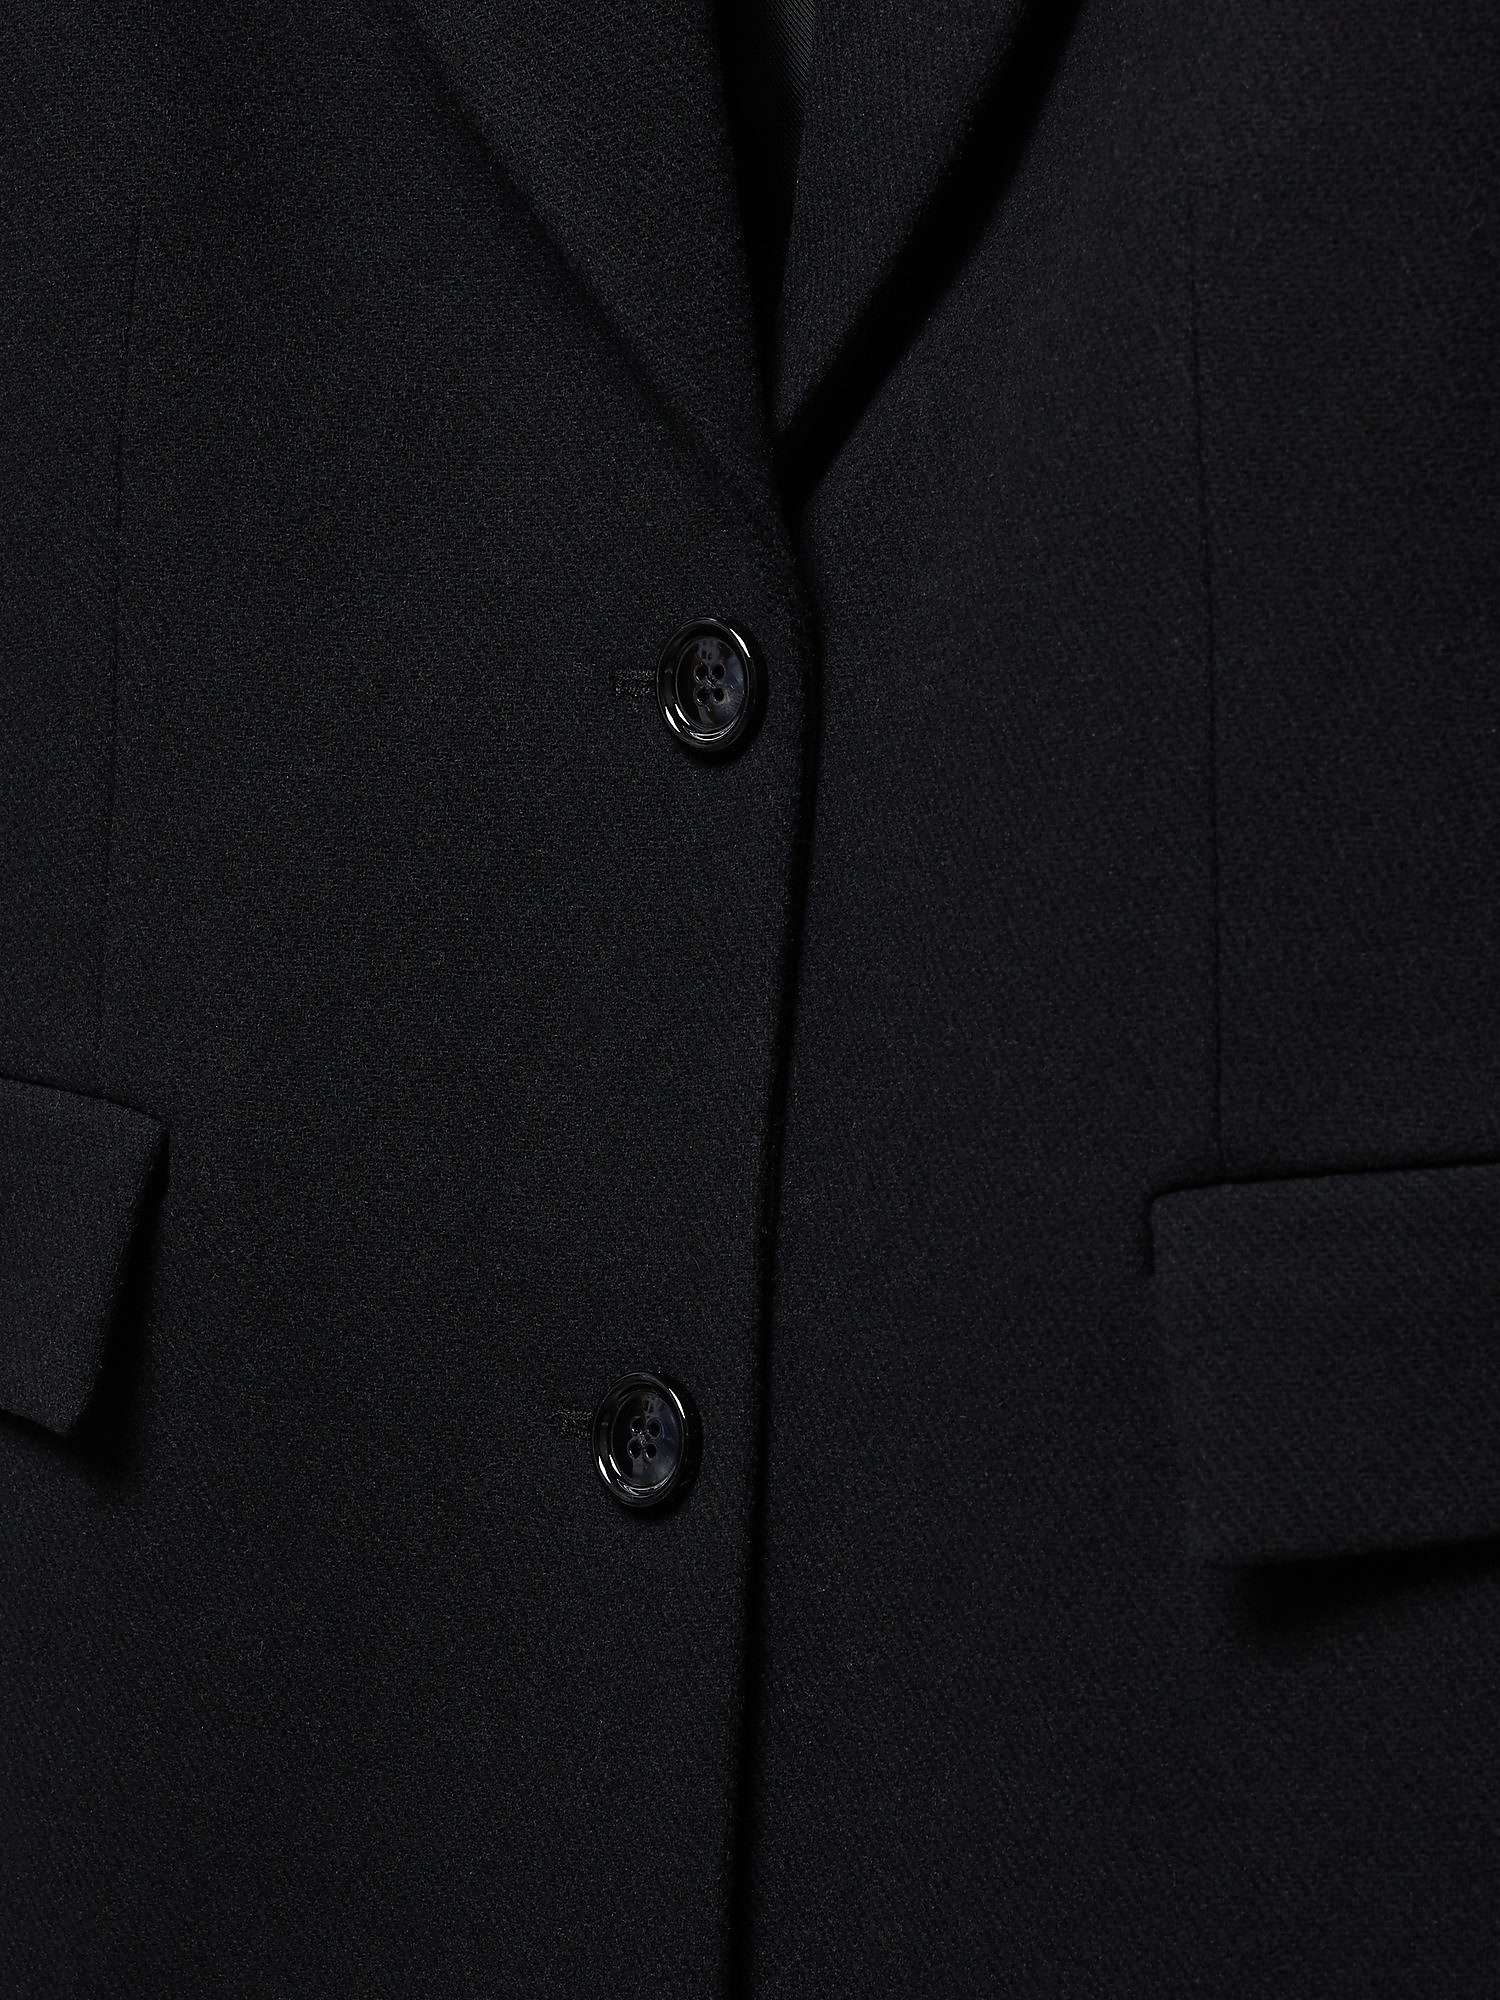 Buy Mango Khalo Wool Blend Coat, Black Online at johnlewis.com